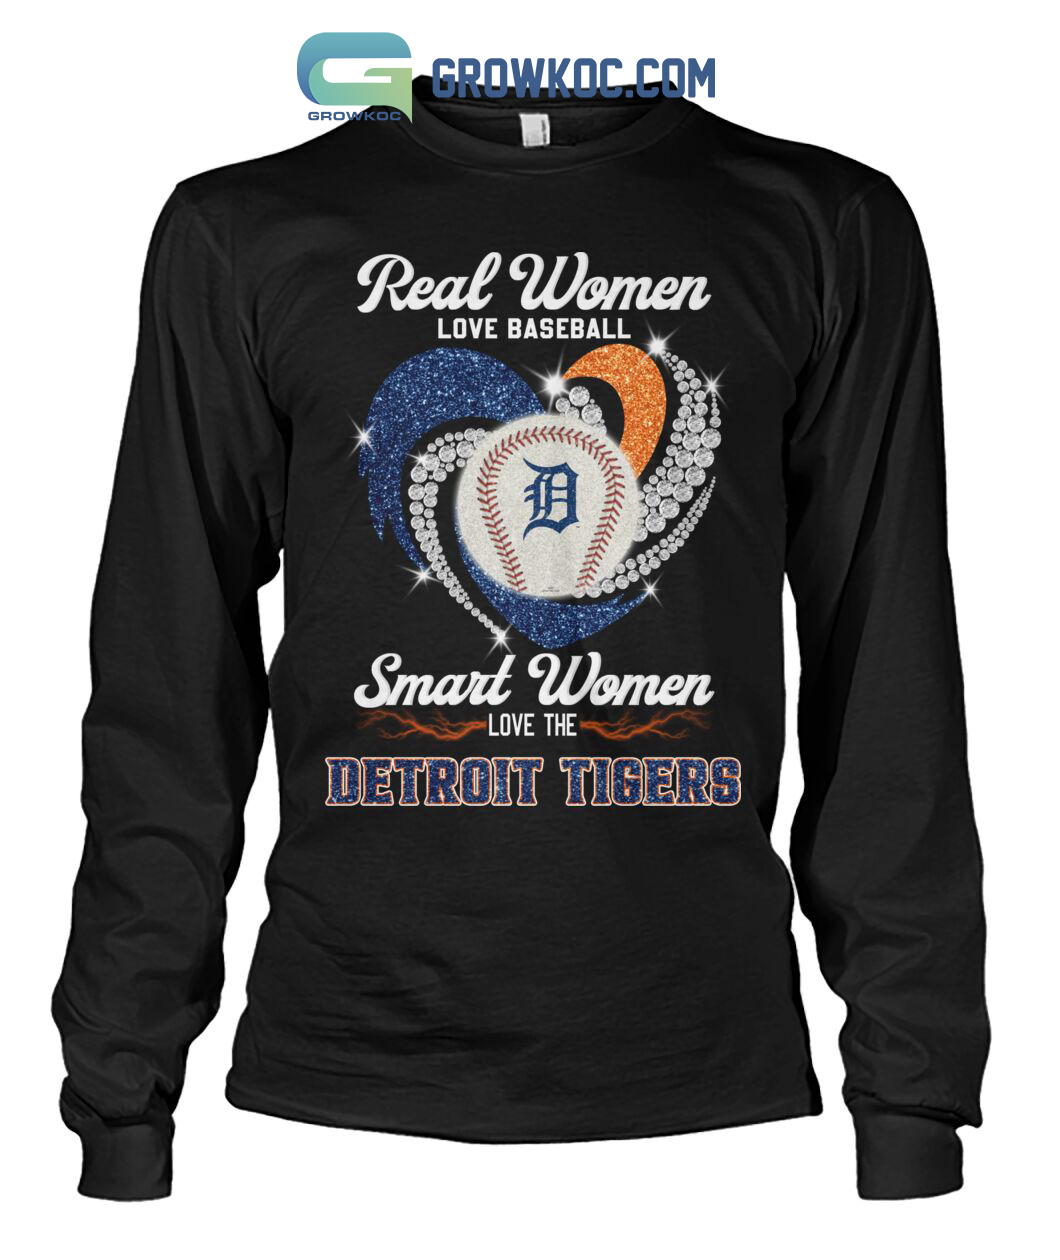 Real Women Love Baseball Smart Women Love The Detroit Tigers T